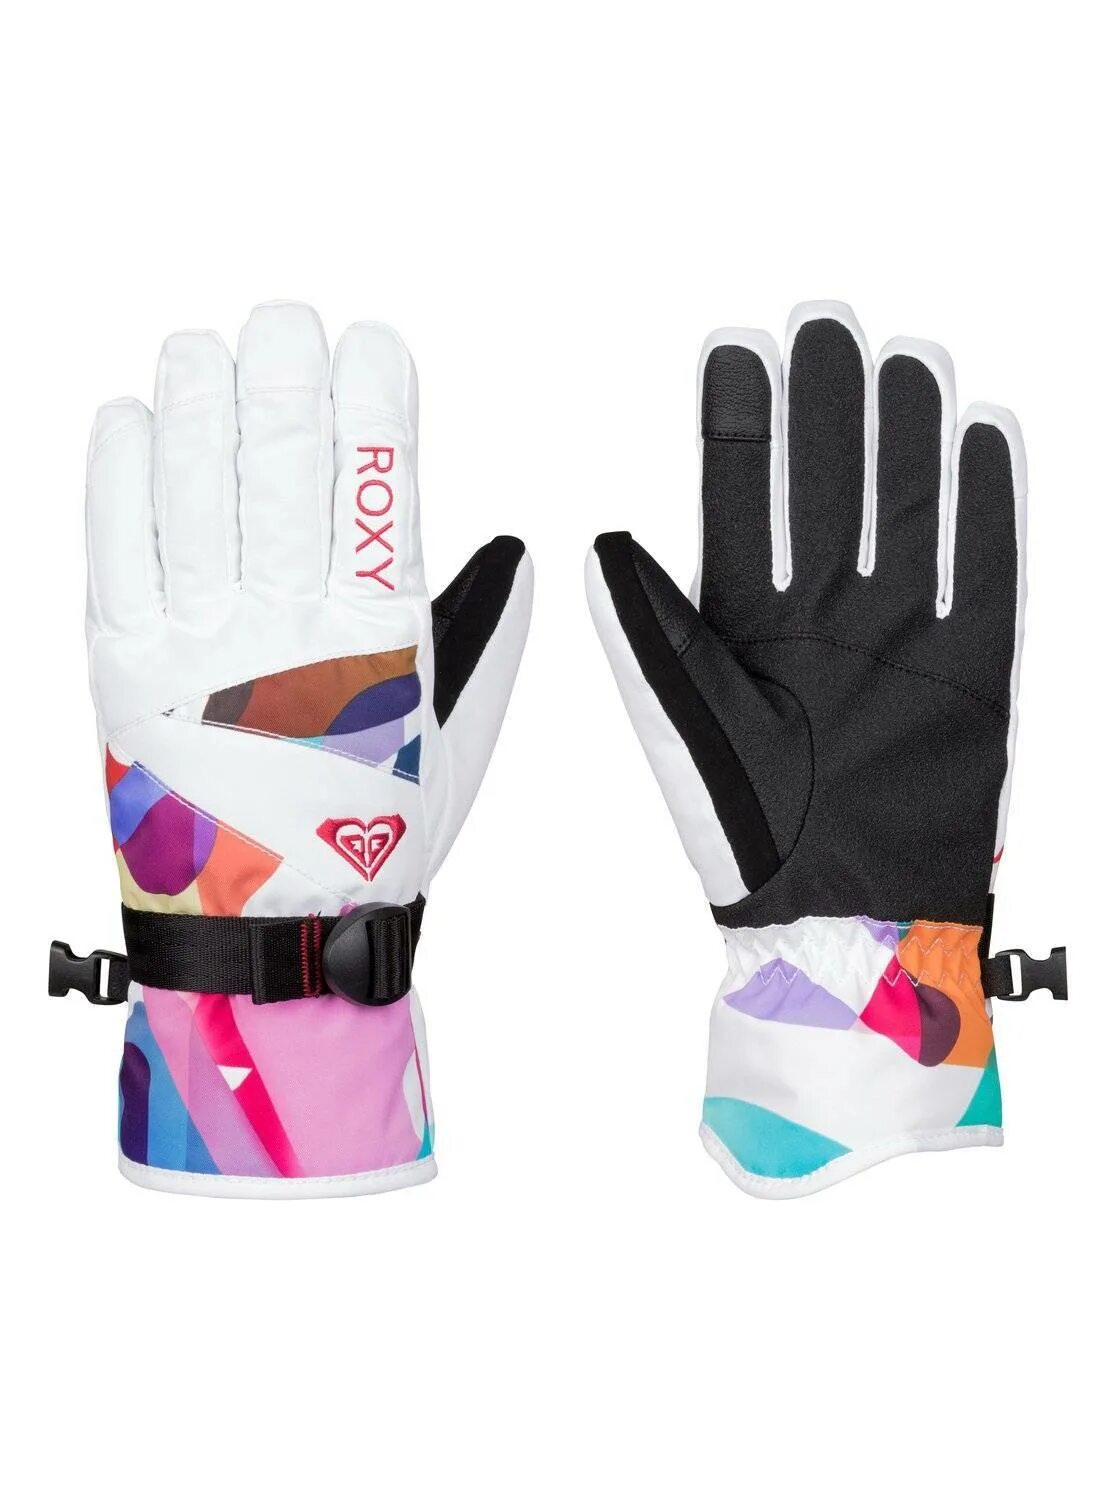 Перчатки Roxy Jetty Gloves белые. Roxy перчатки сноубордические женские. Roxy Jetty g Gloves. Горнолыжные перчатки Quicksilver.